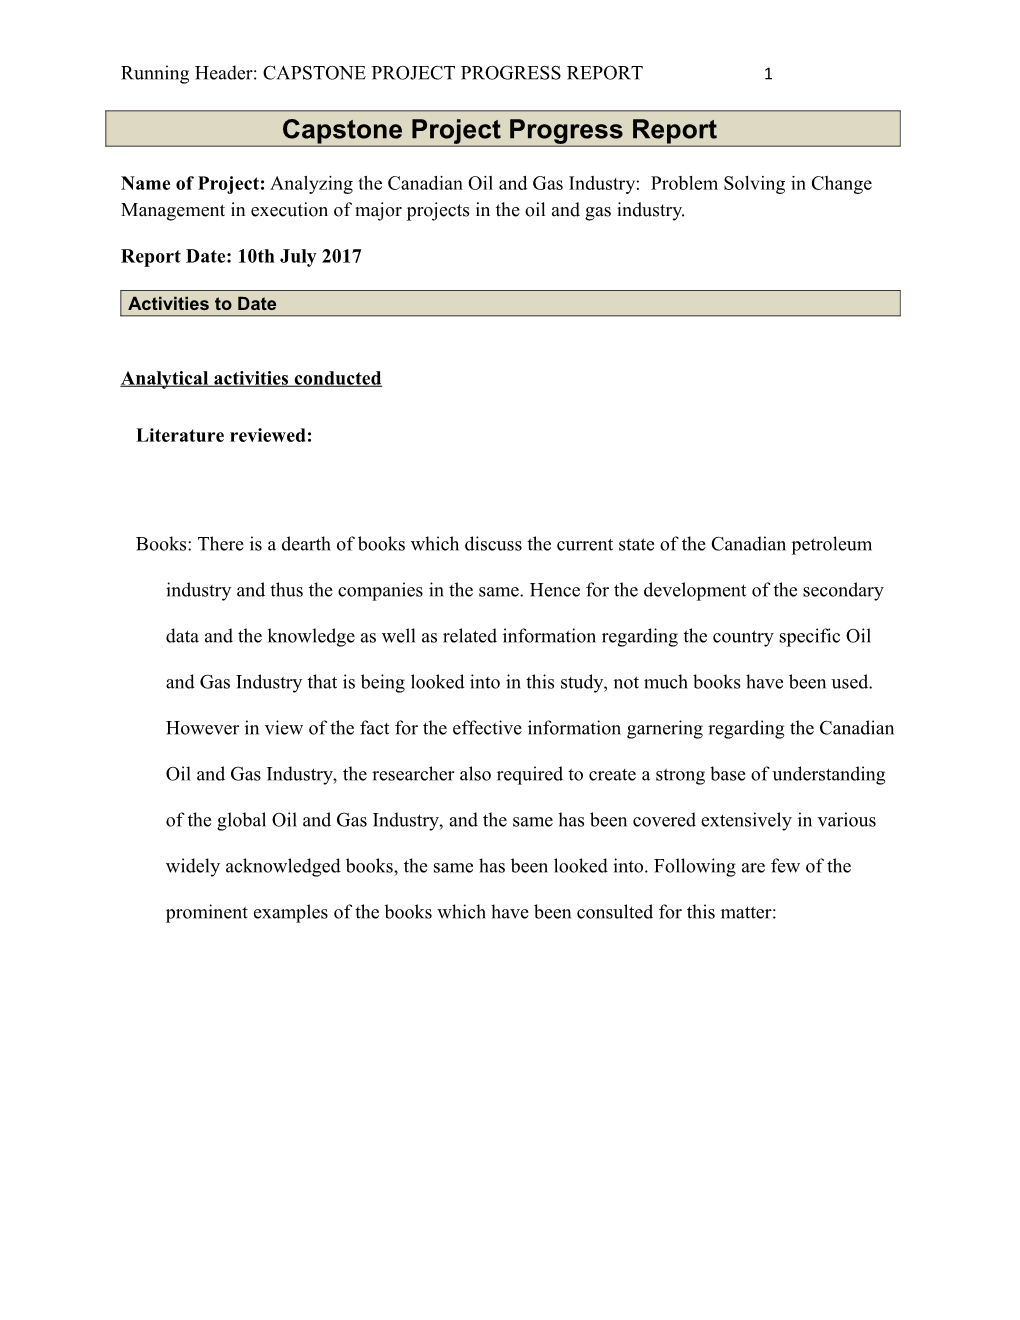 Capstone Project Progress Report